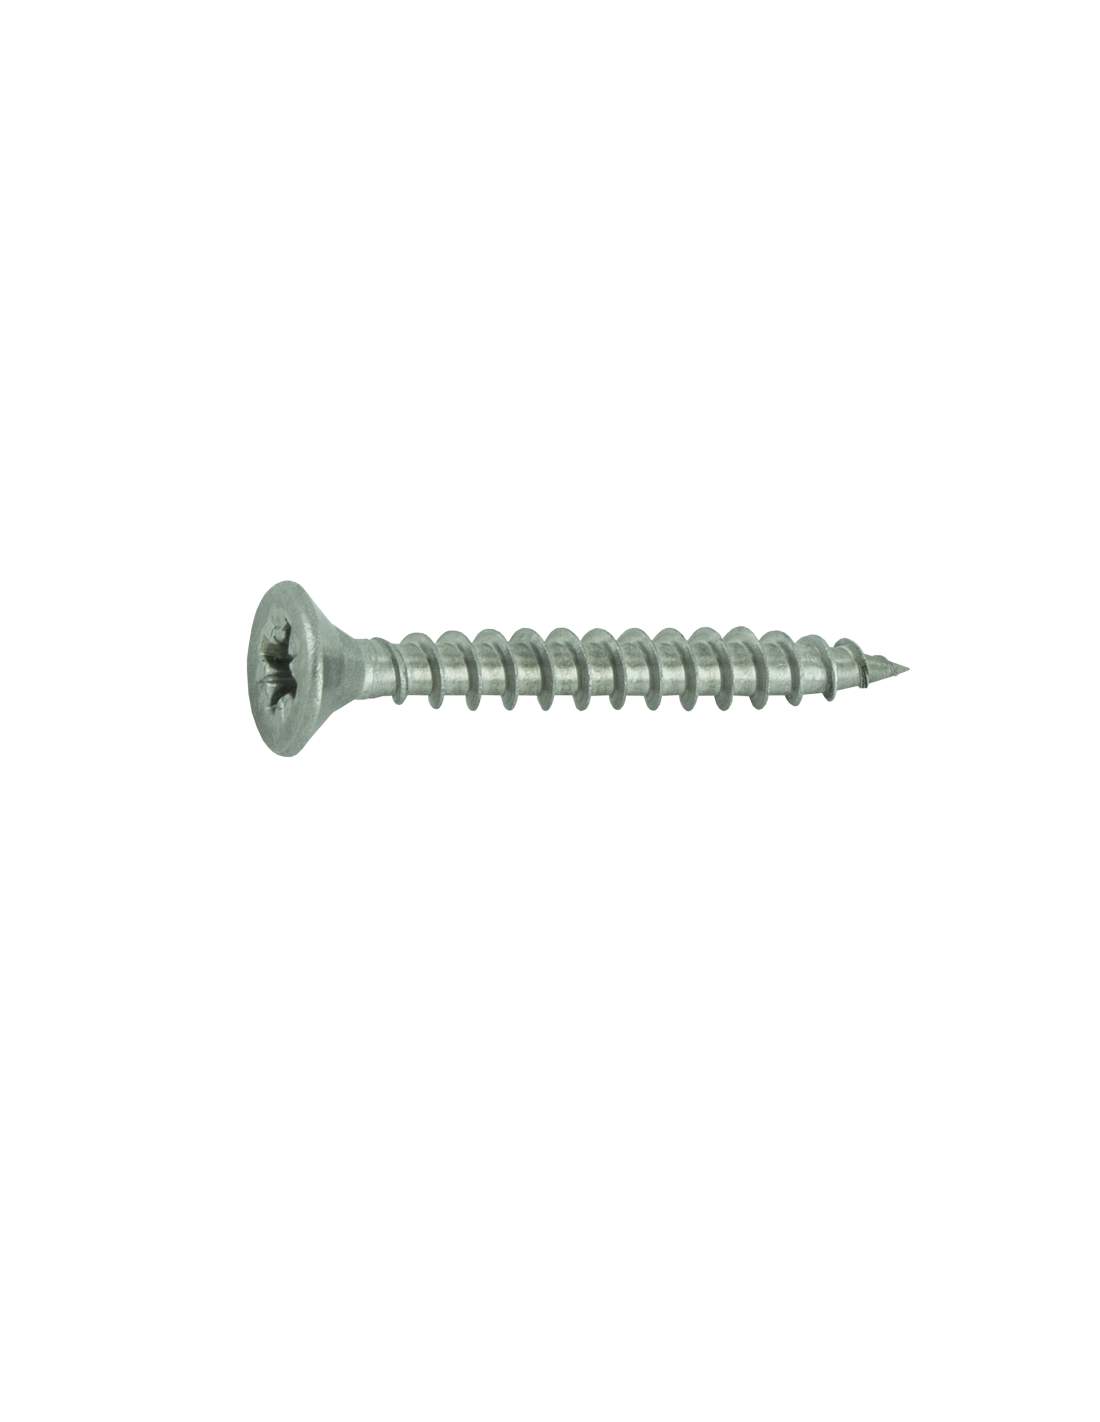 Pozidriv stainless steel A2 3.5x20 countersunk screws, 34 pcs.